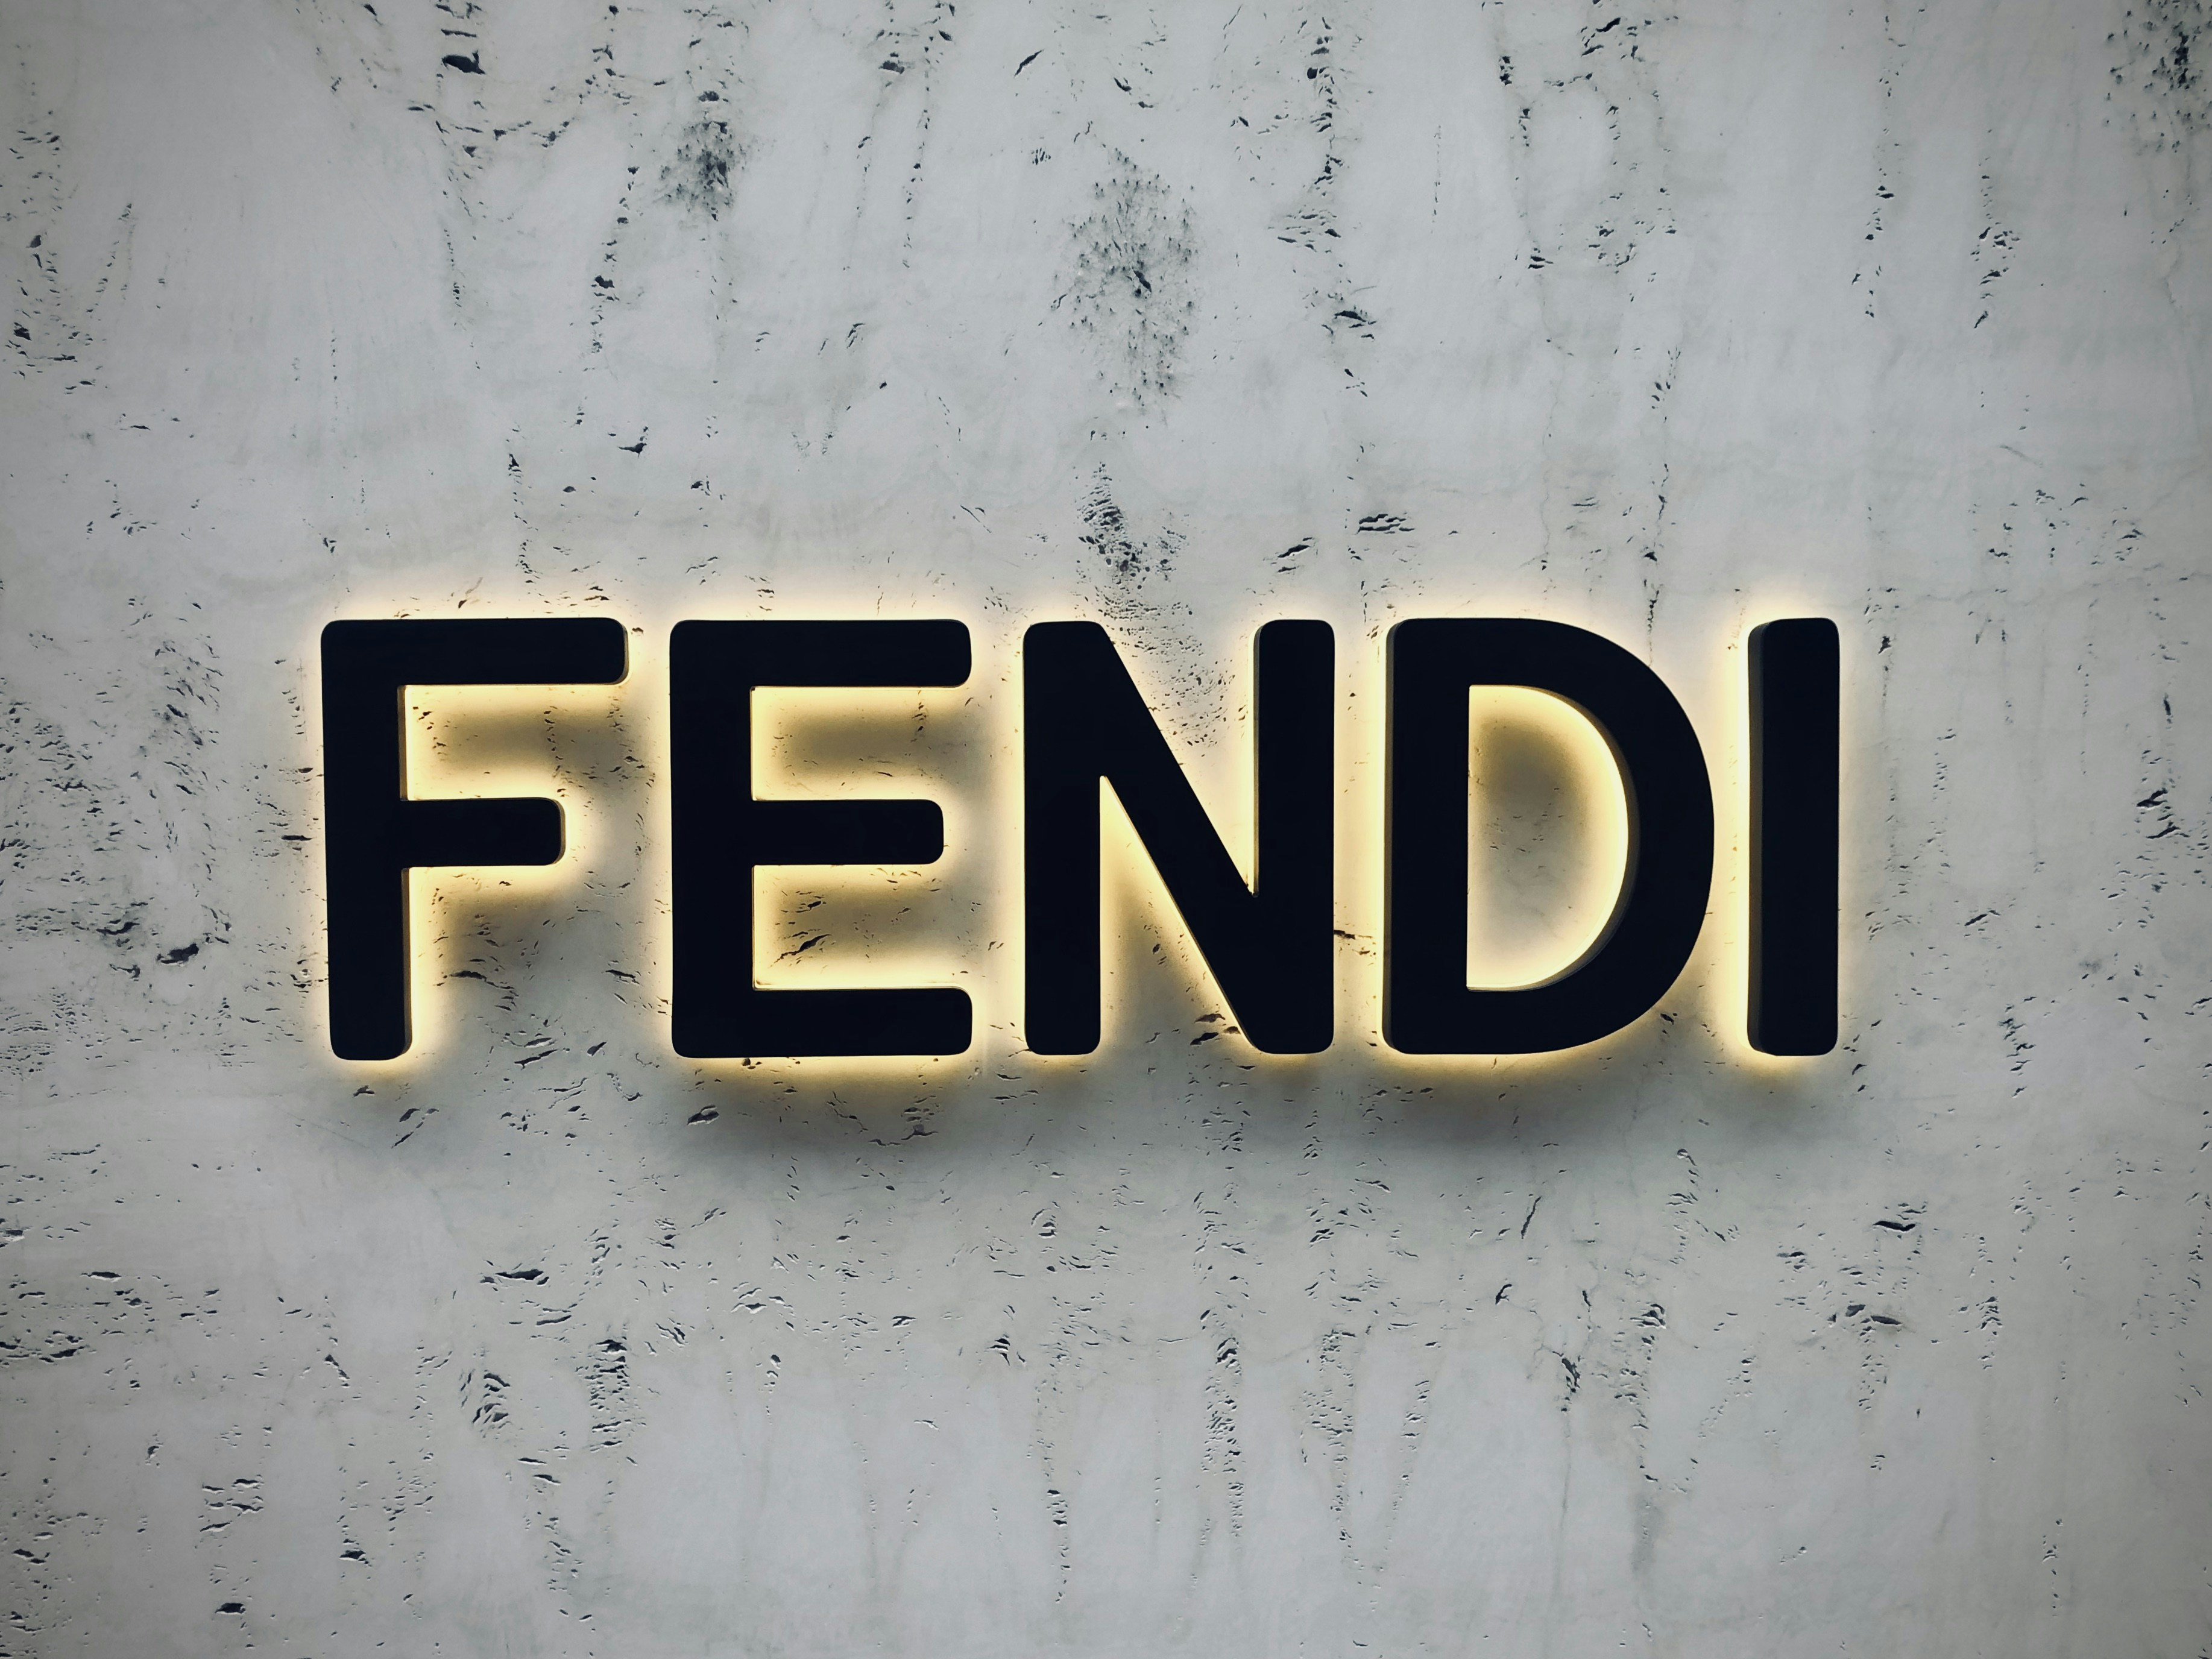 Fendi logo on marble